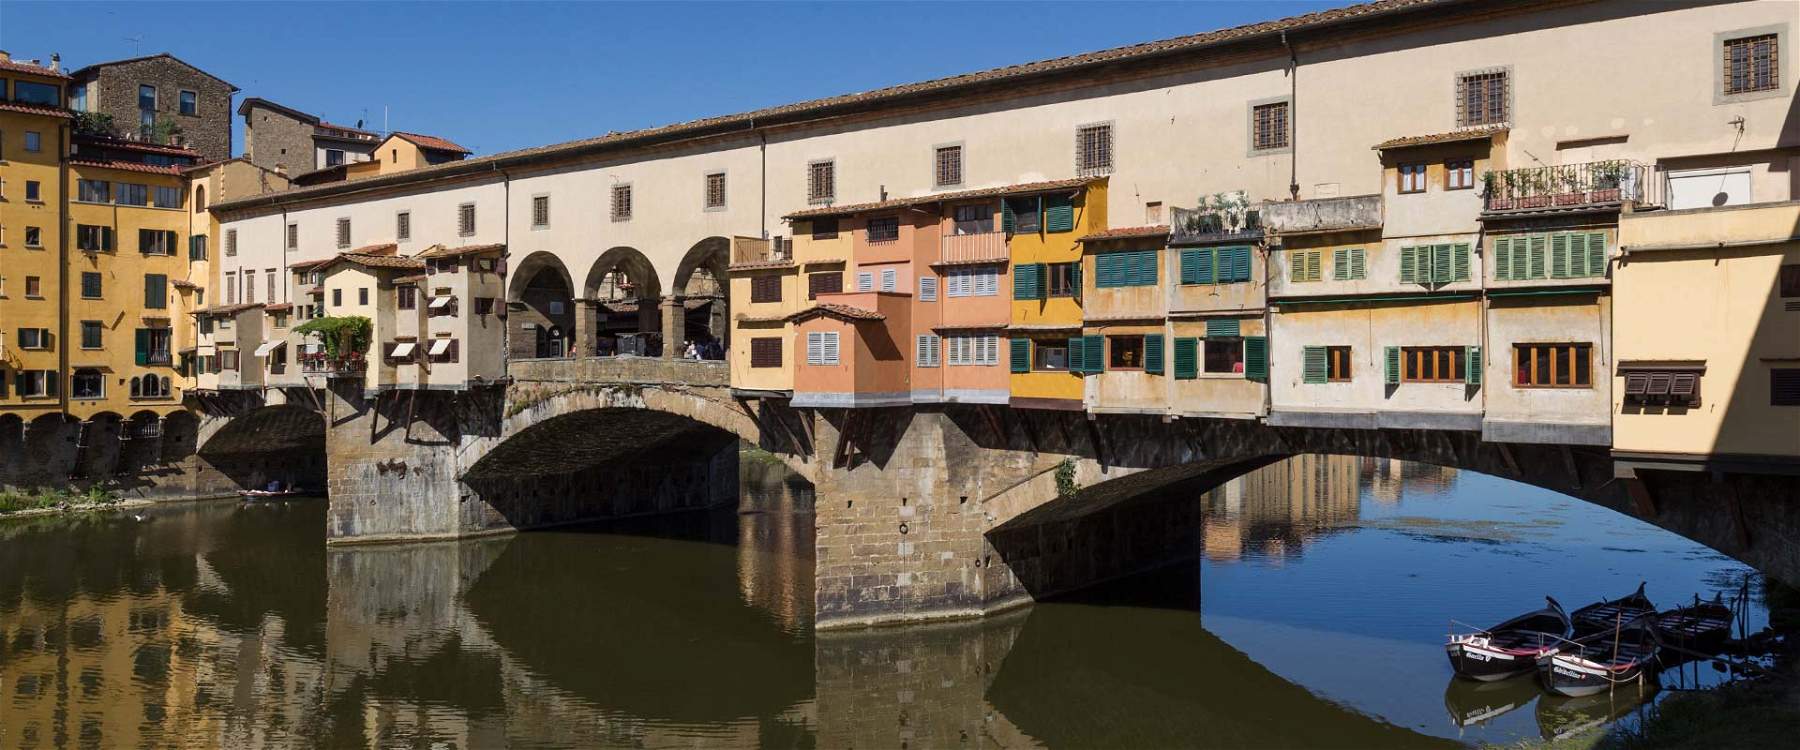 Le corridor de Vasari, un autre regard sur Florence